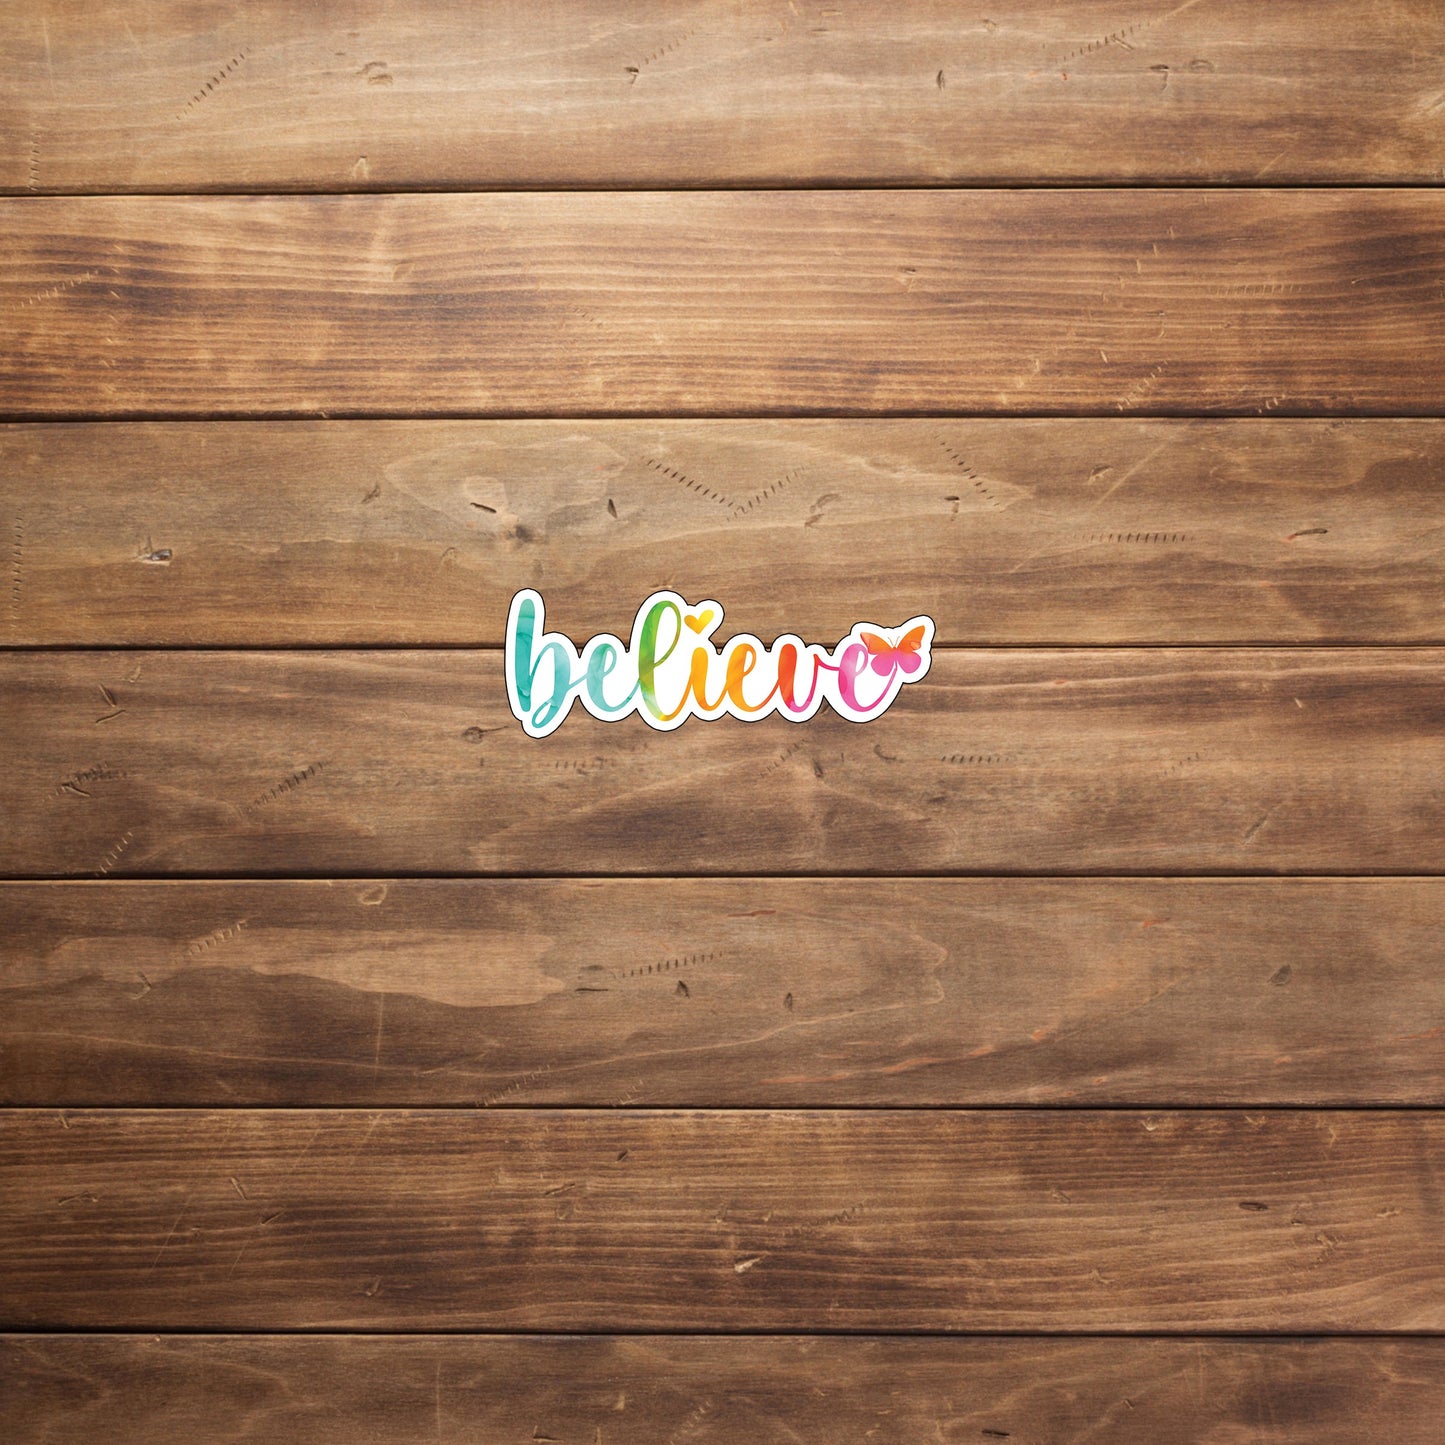 believe-sticker